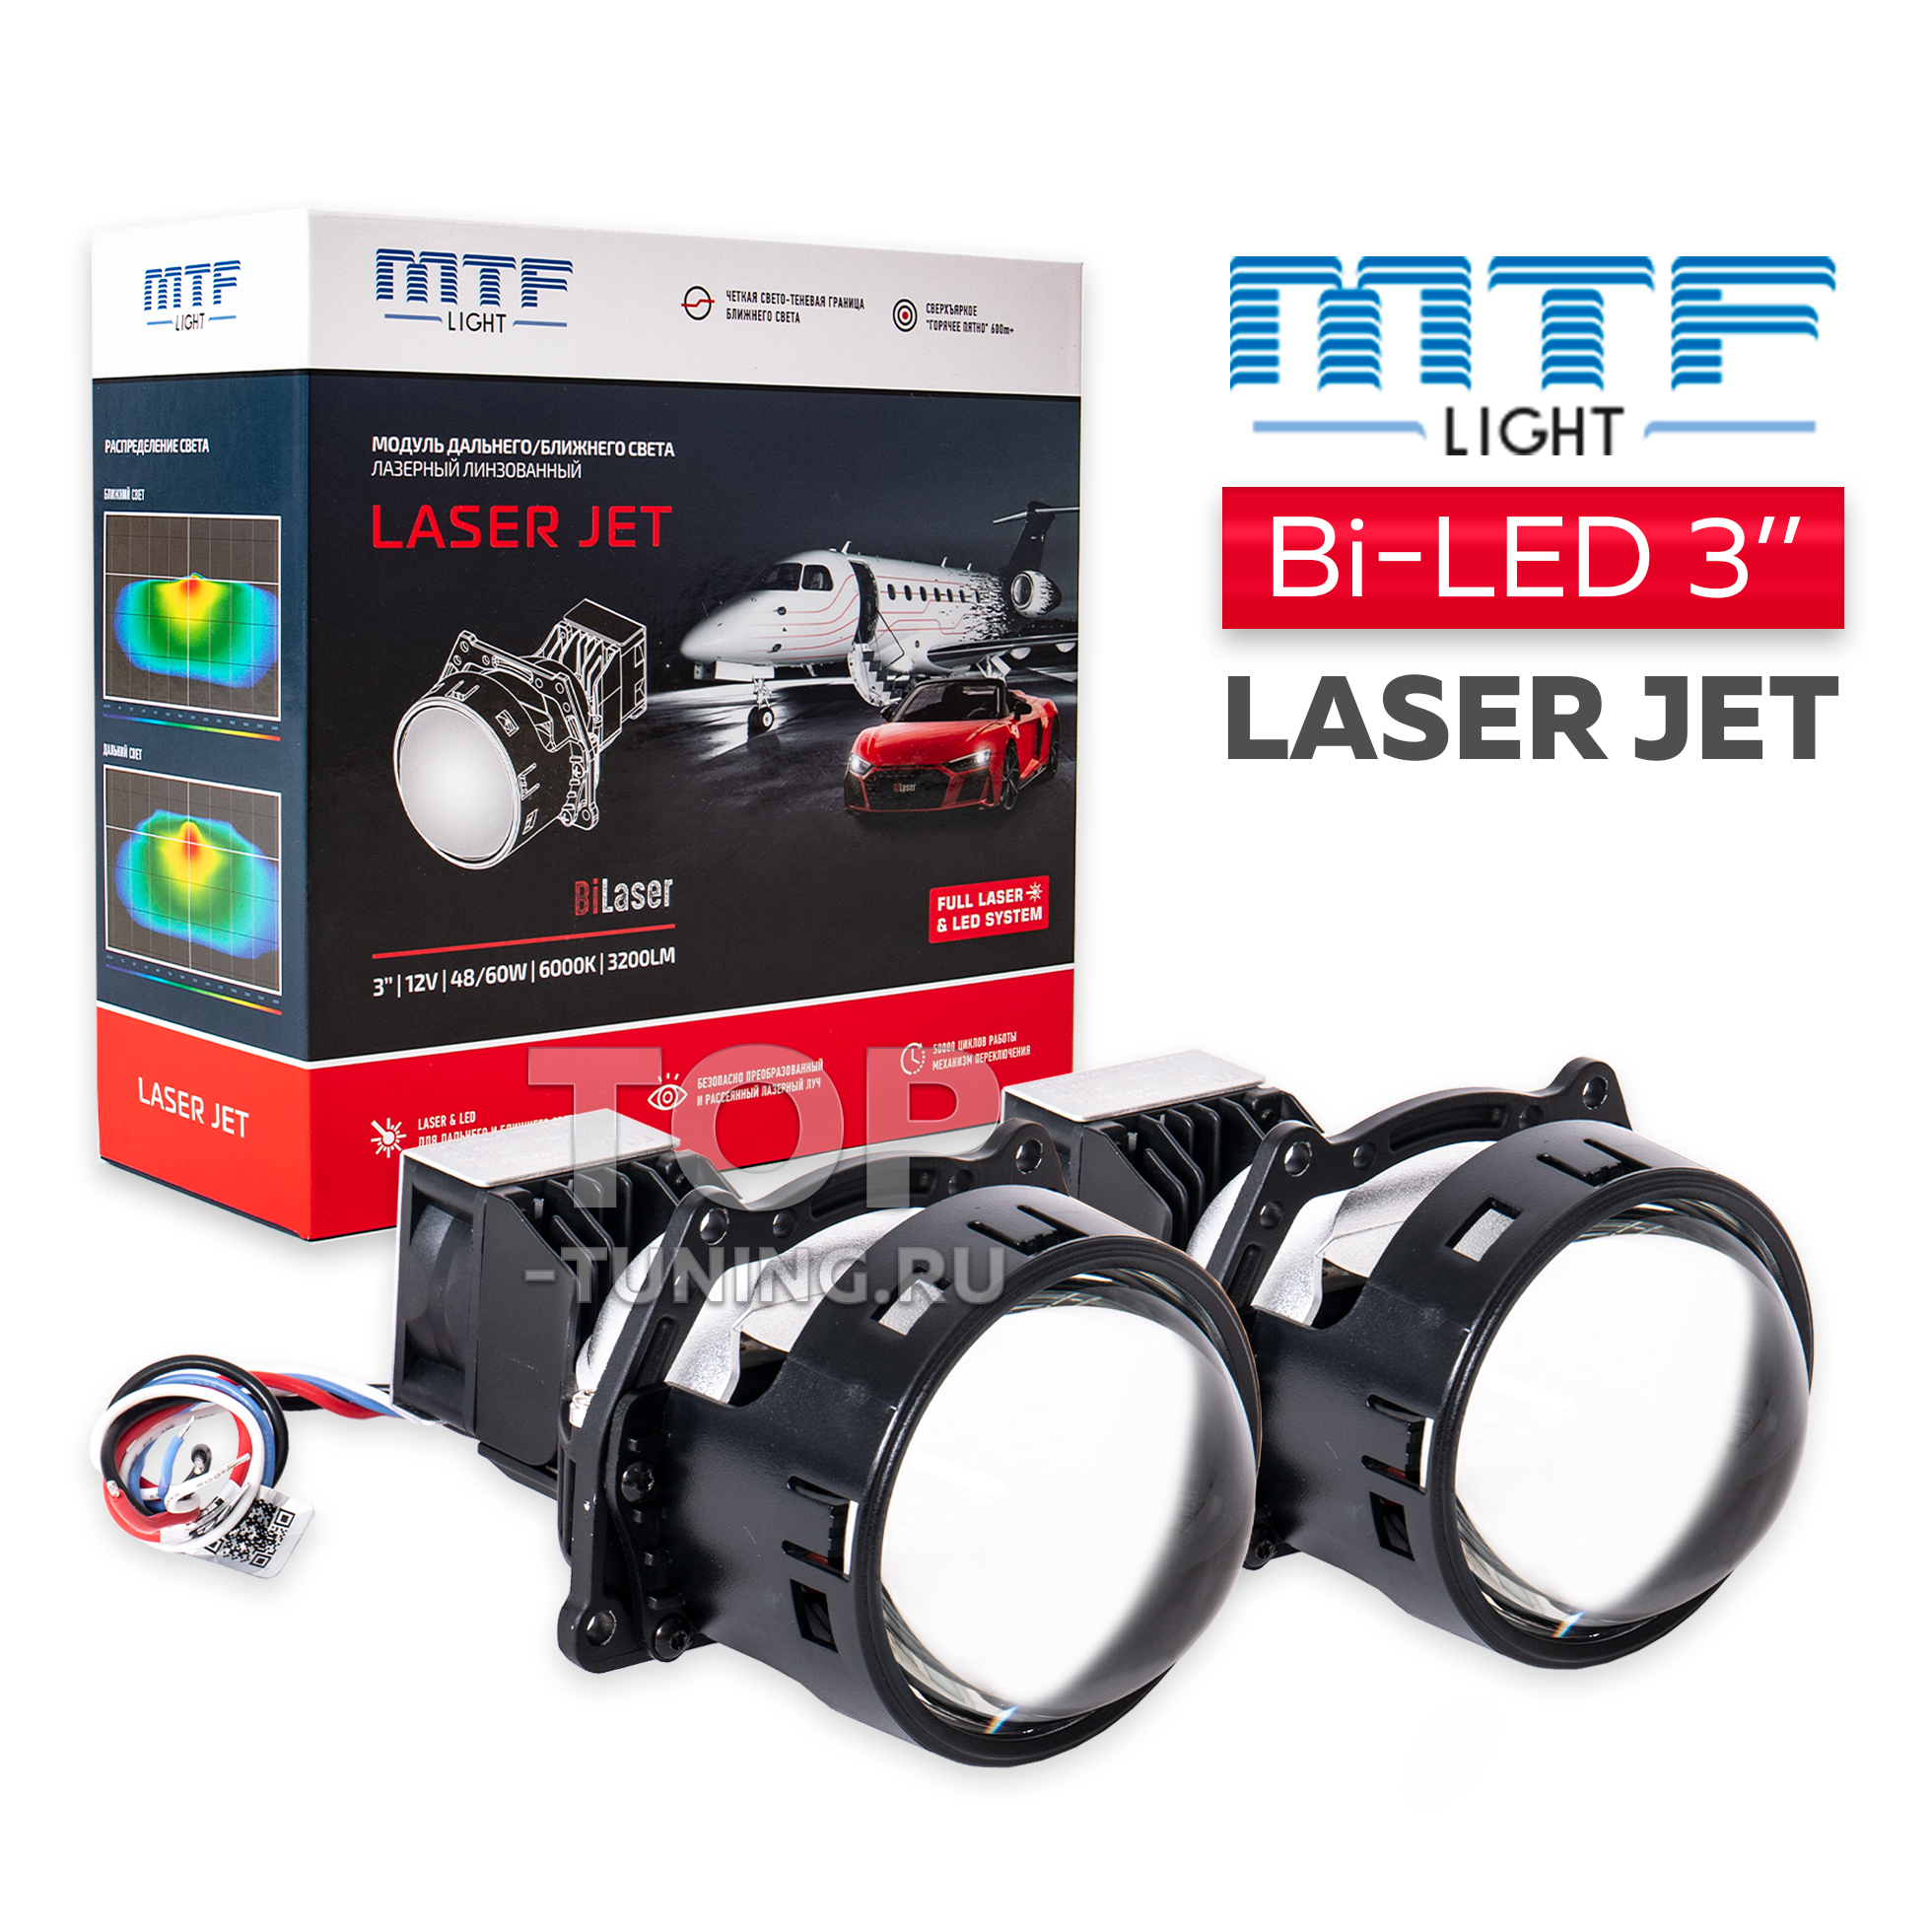 Mtf линзы bi. Clearlight 3.0 bi-led. MTF Light Laser Jet bi-led 3.0 6000k линзы. Линзы МТФ би лед.